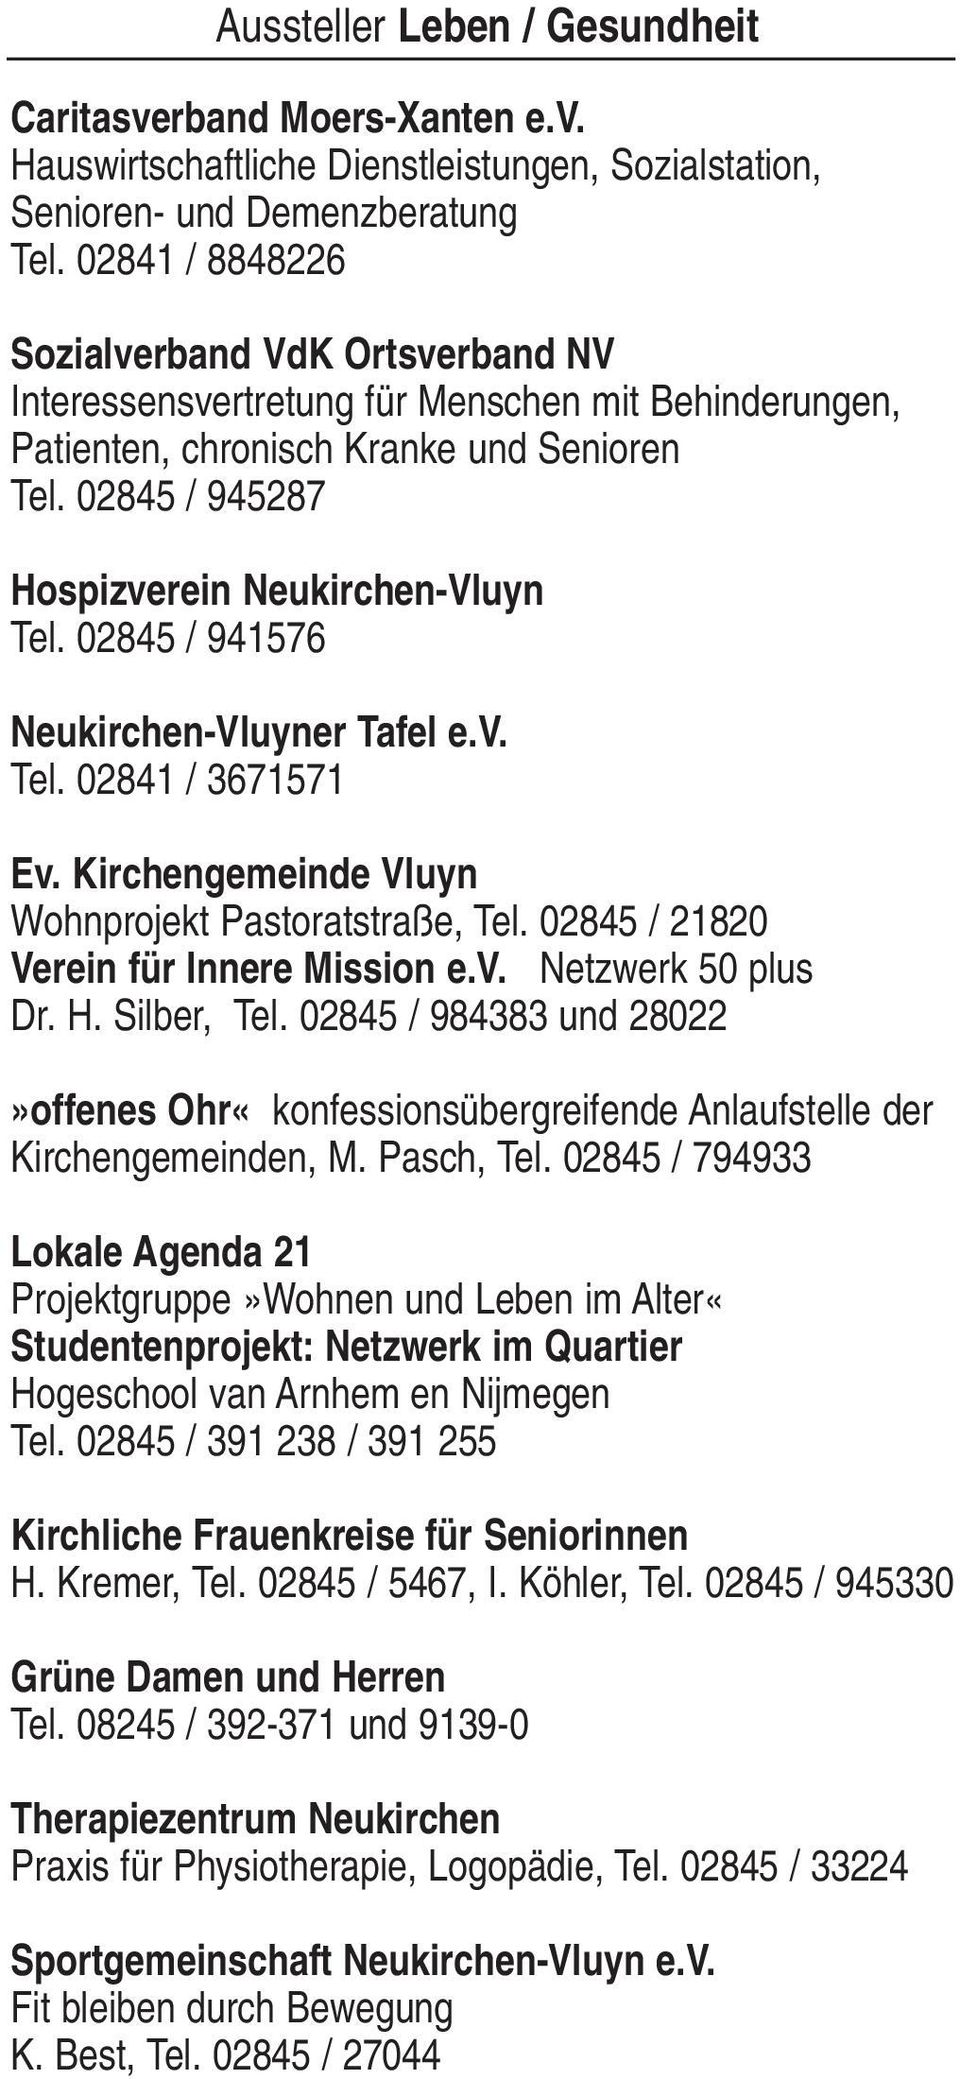 02845 / 941576 Neukirchen-Vluyner Tafel e.v. Tel. 02841 / 3671571 Ev. Kirchengemeinde Vluyn Wohnprojekt Pastoratstraße, Tel. 02845 / 21820 Verein für Innere Mission e.v. Netzwerk 50 plus Dr. H.